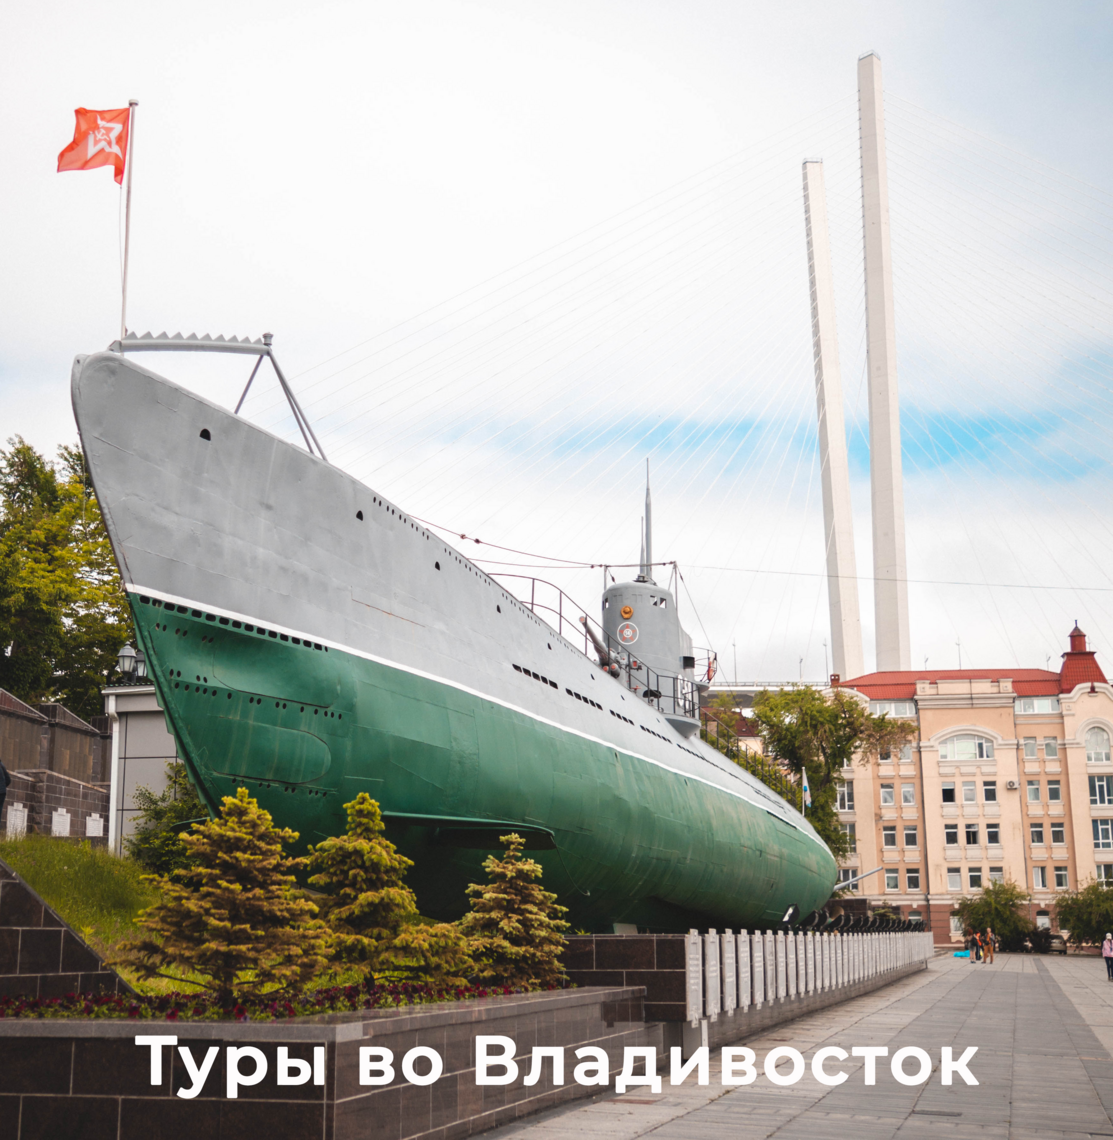 Туры во Владивосток из СПб